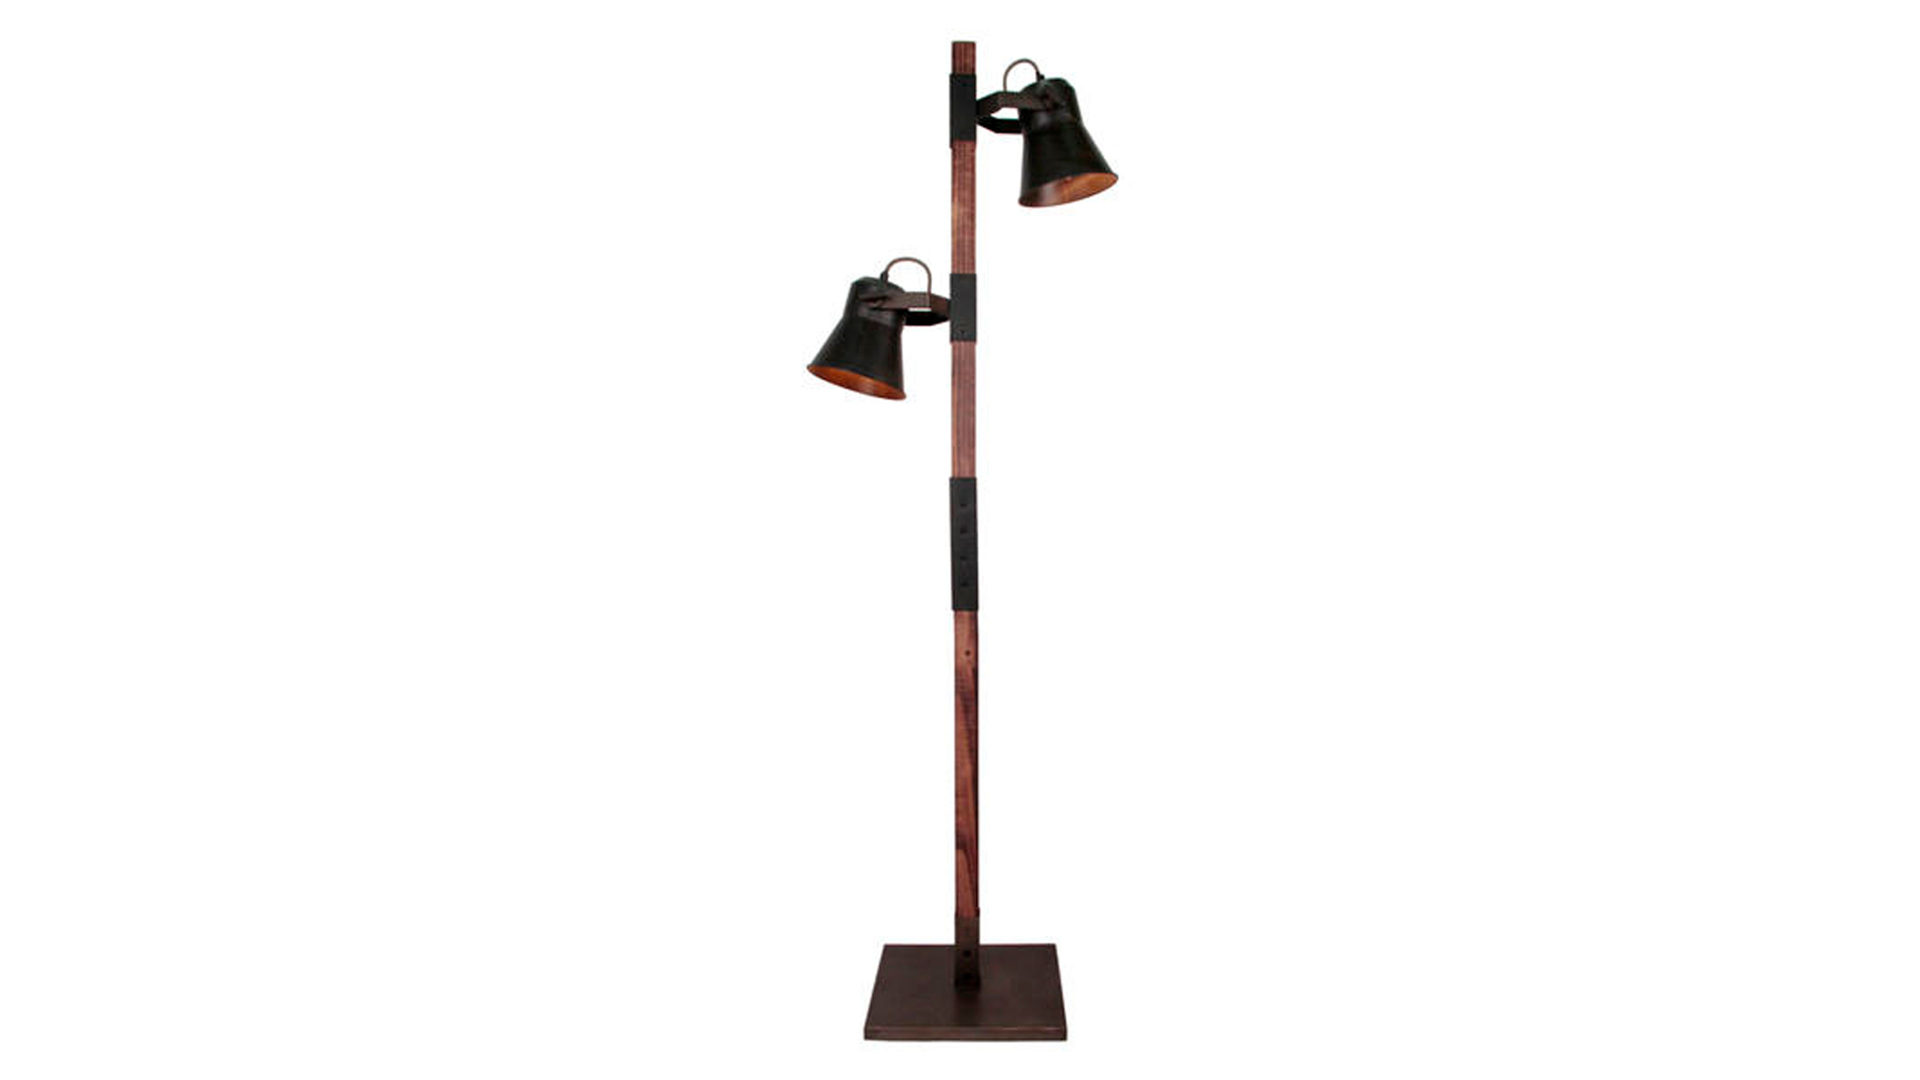 Brilliant Tischlampe Plow, schwarzer Stahl ca. Cuxhaven, & 55 – Holz cm, Lamstedt, Höhe Bremerhaven